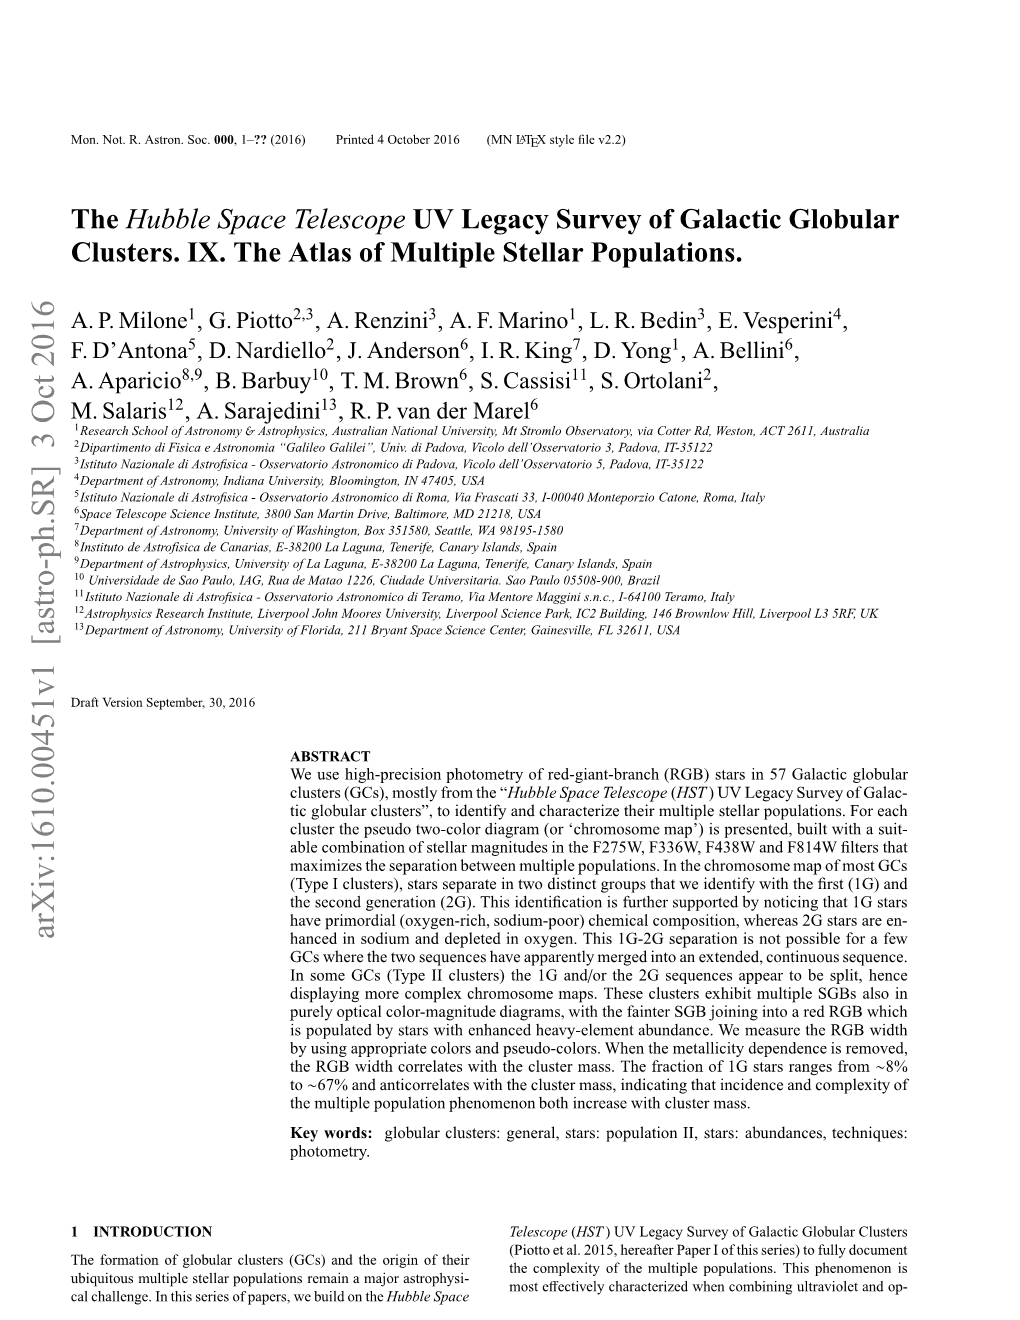 The Hubble Space Telescope UV Legacy Survey of Galactic Globular